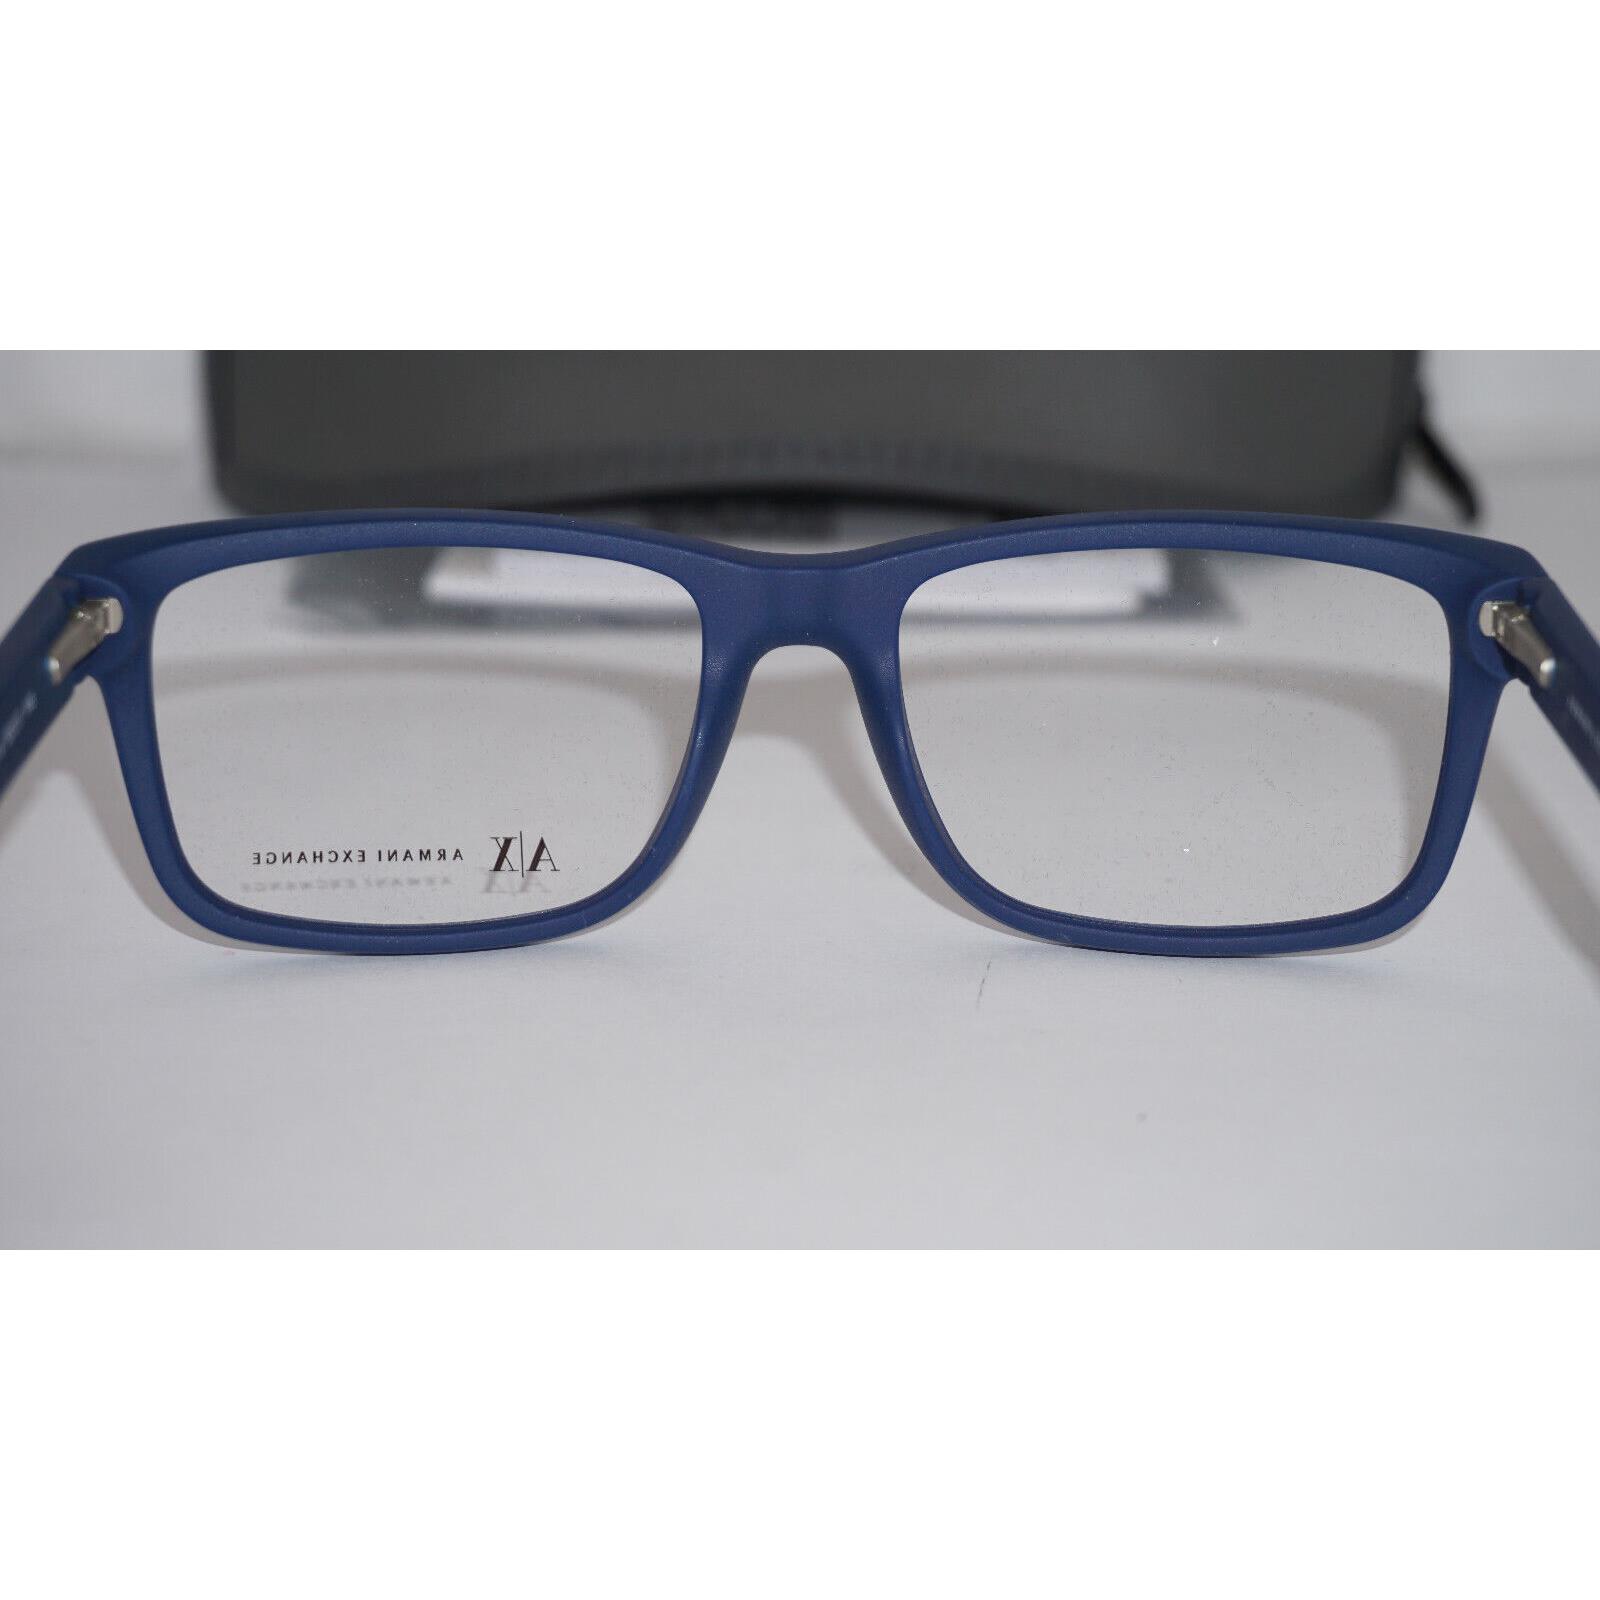 Armani Exchange eyeglasses  - Matte Navy Frame 7